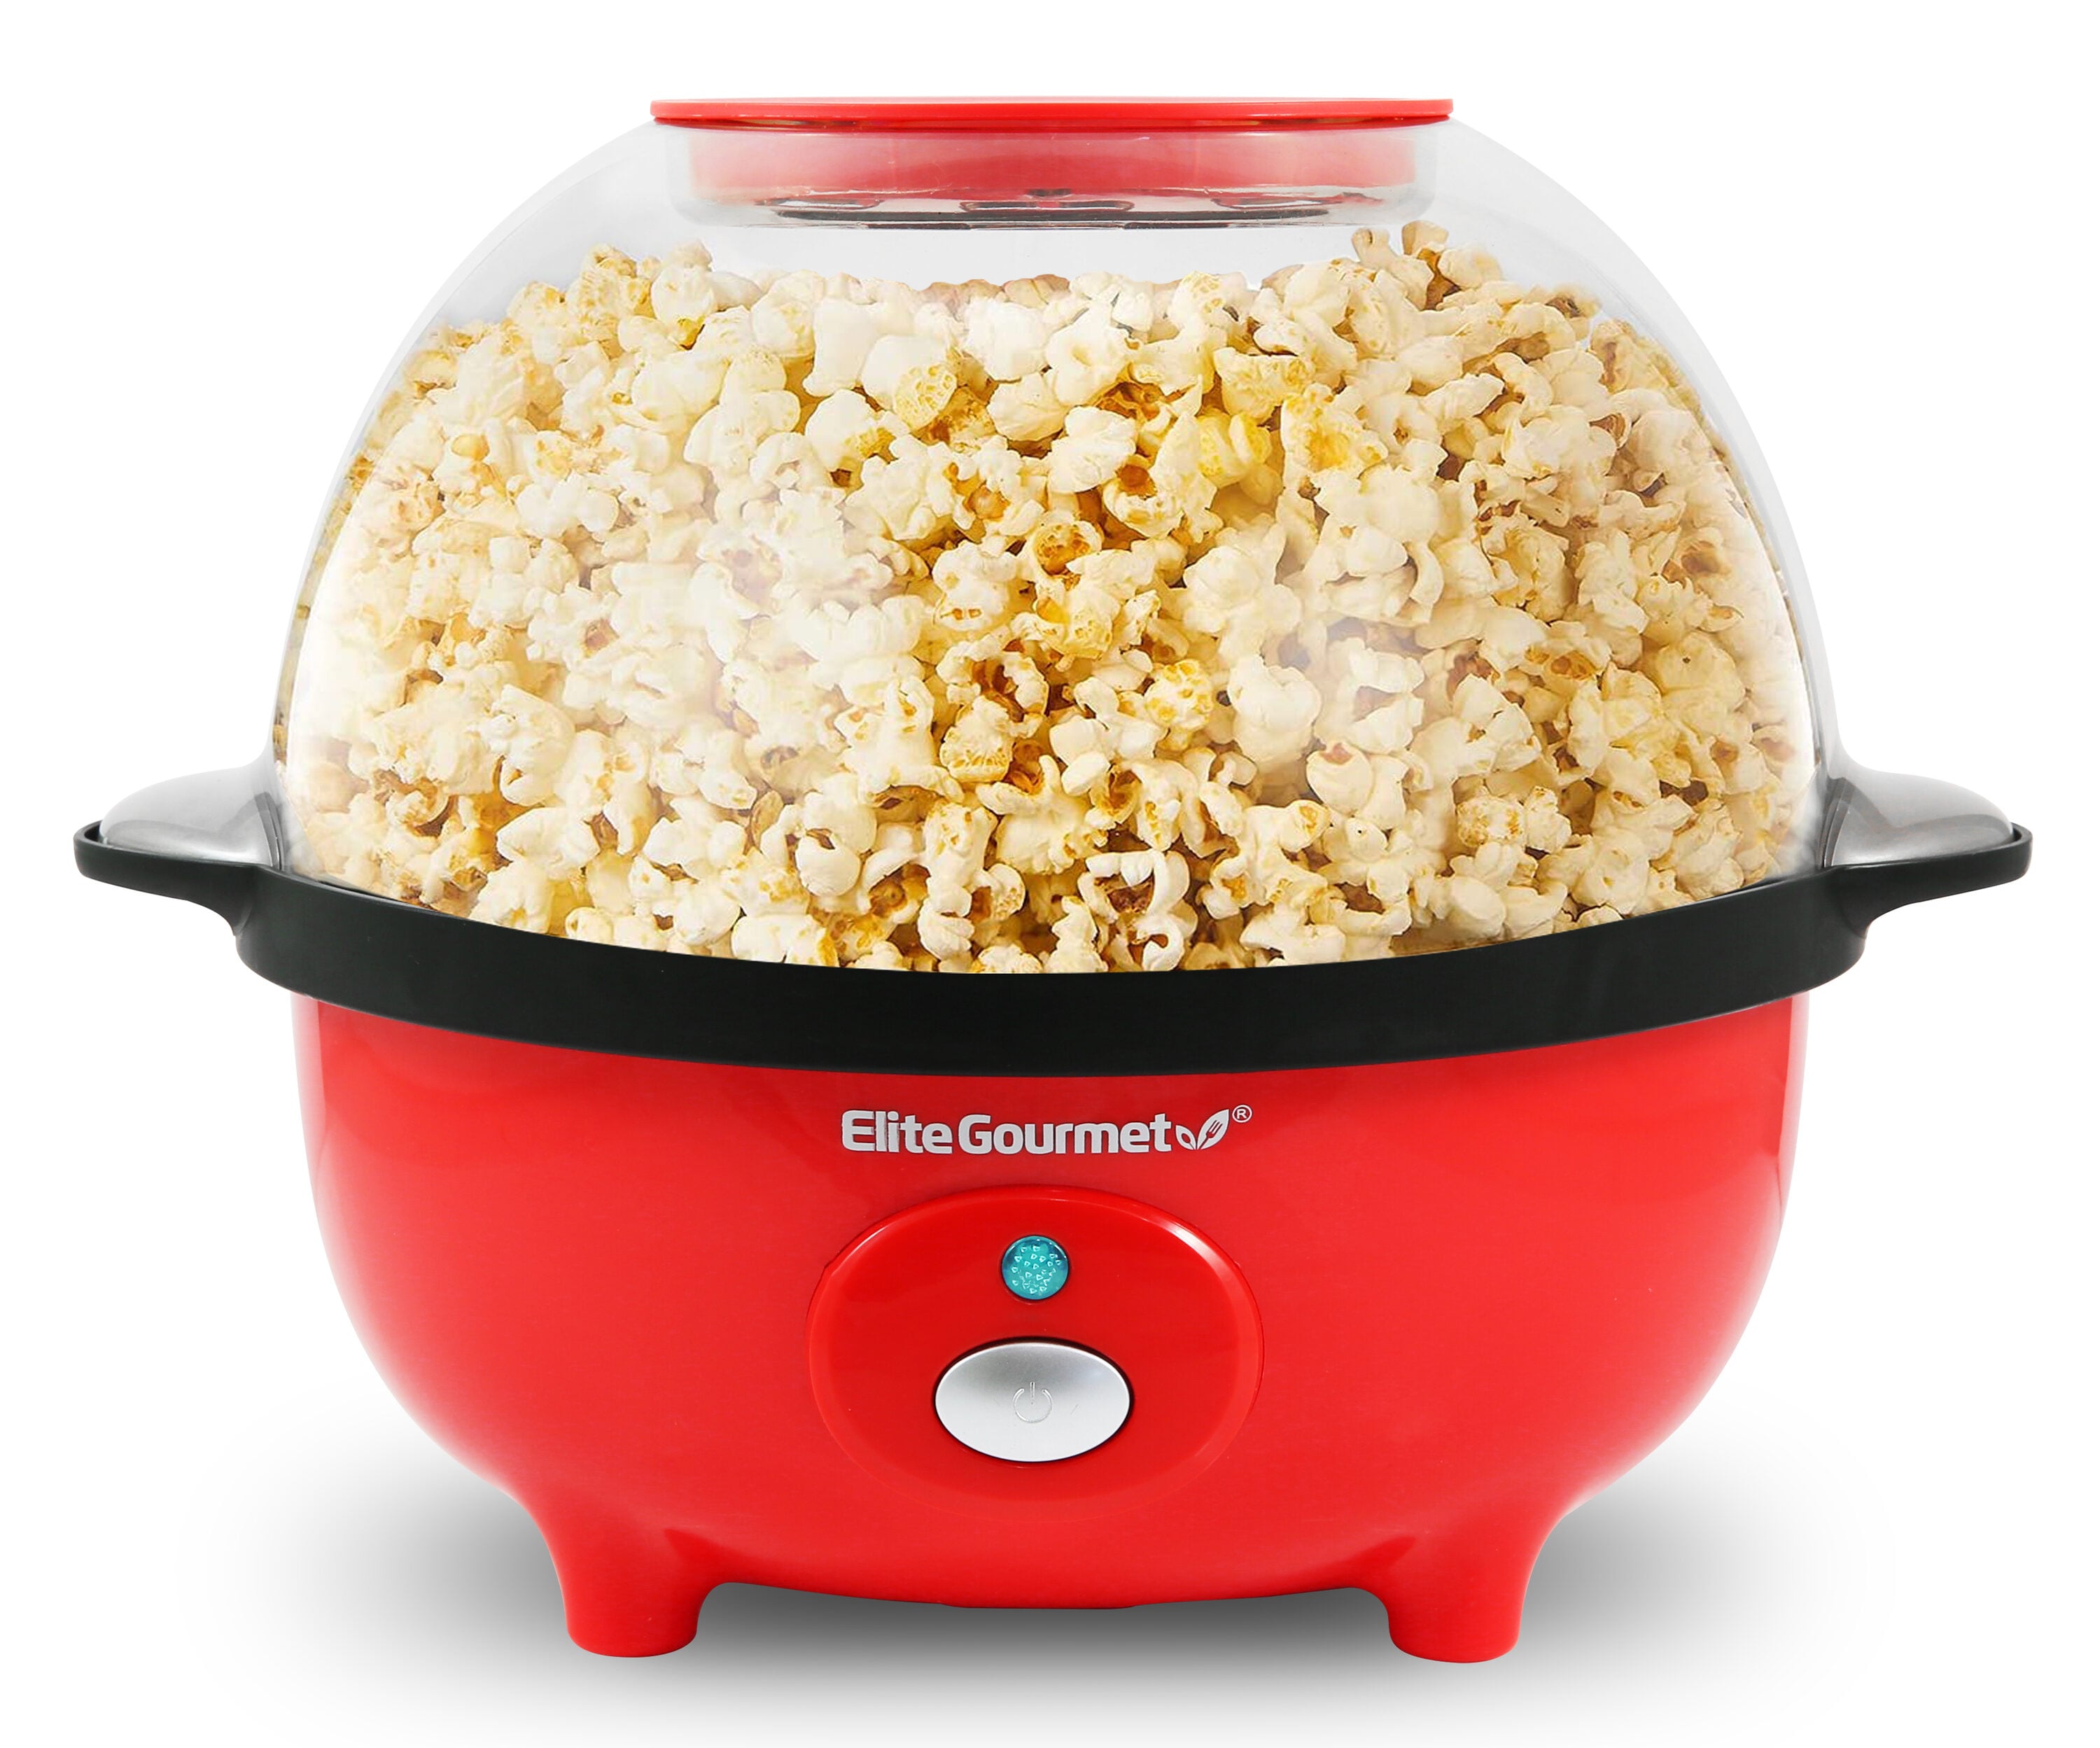 Gourmet Popcorn Gift Set - Variety 12-Pack Microwave Popcorn Kit